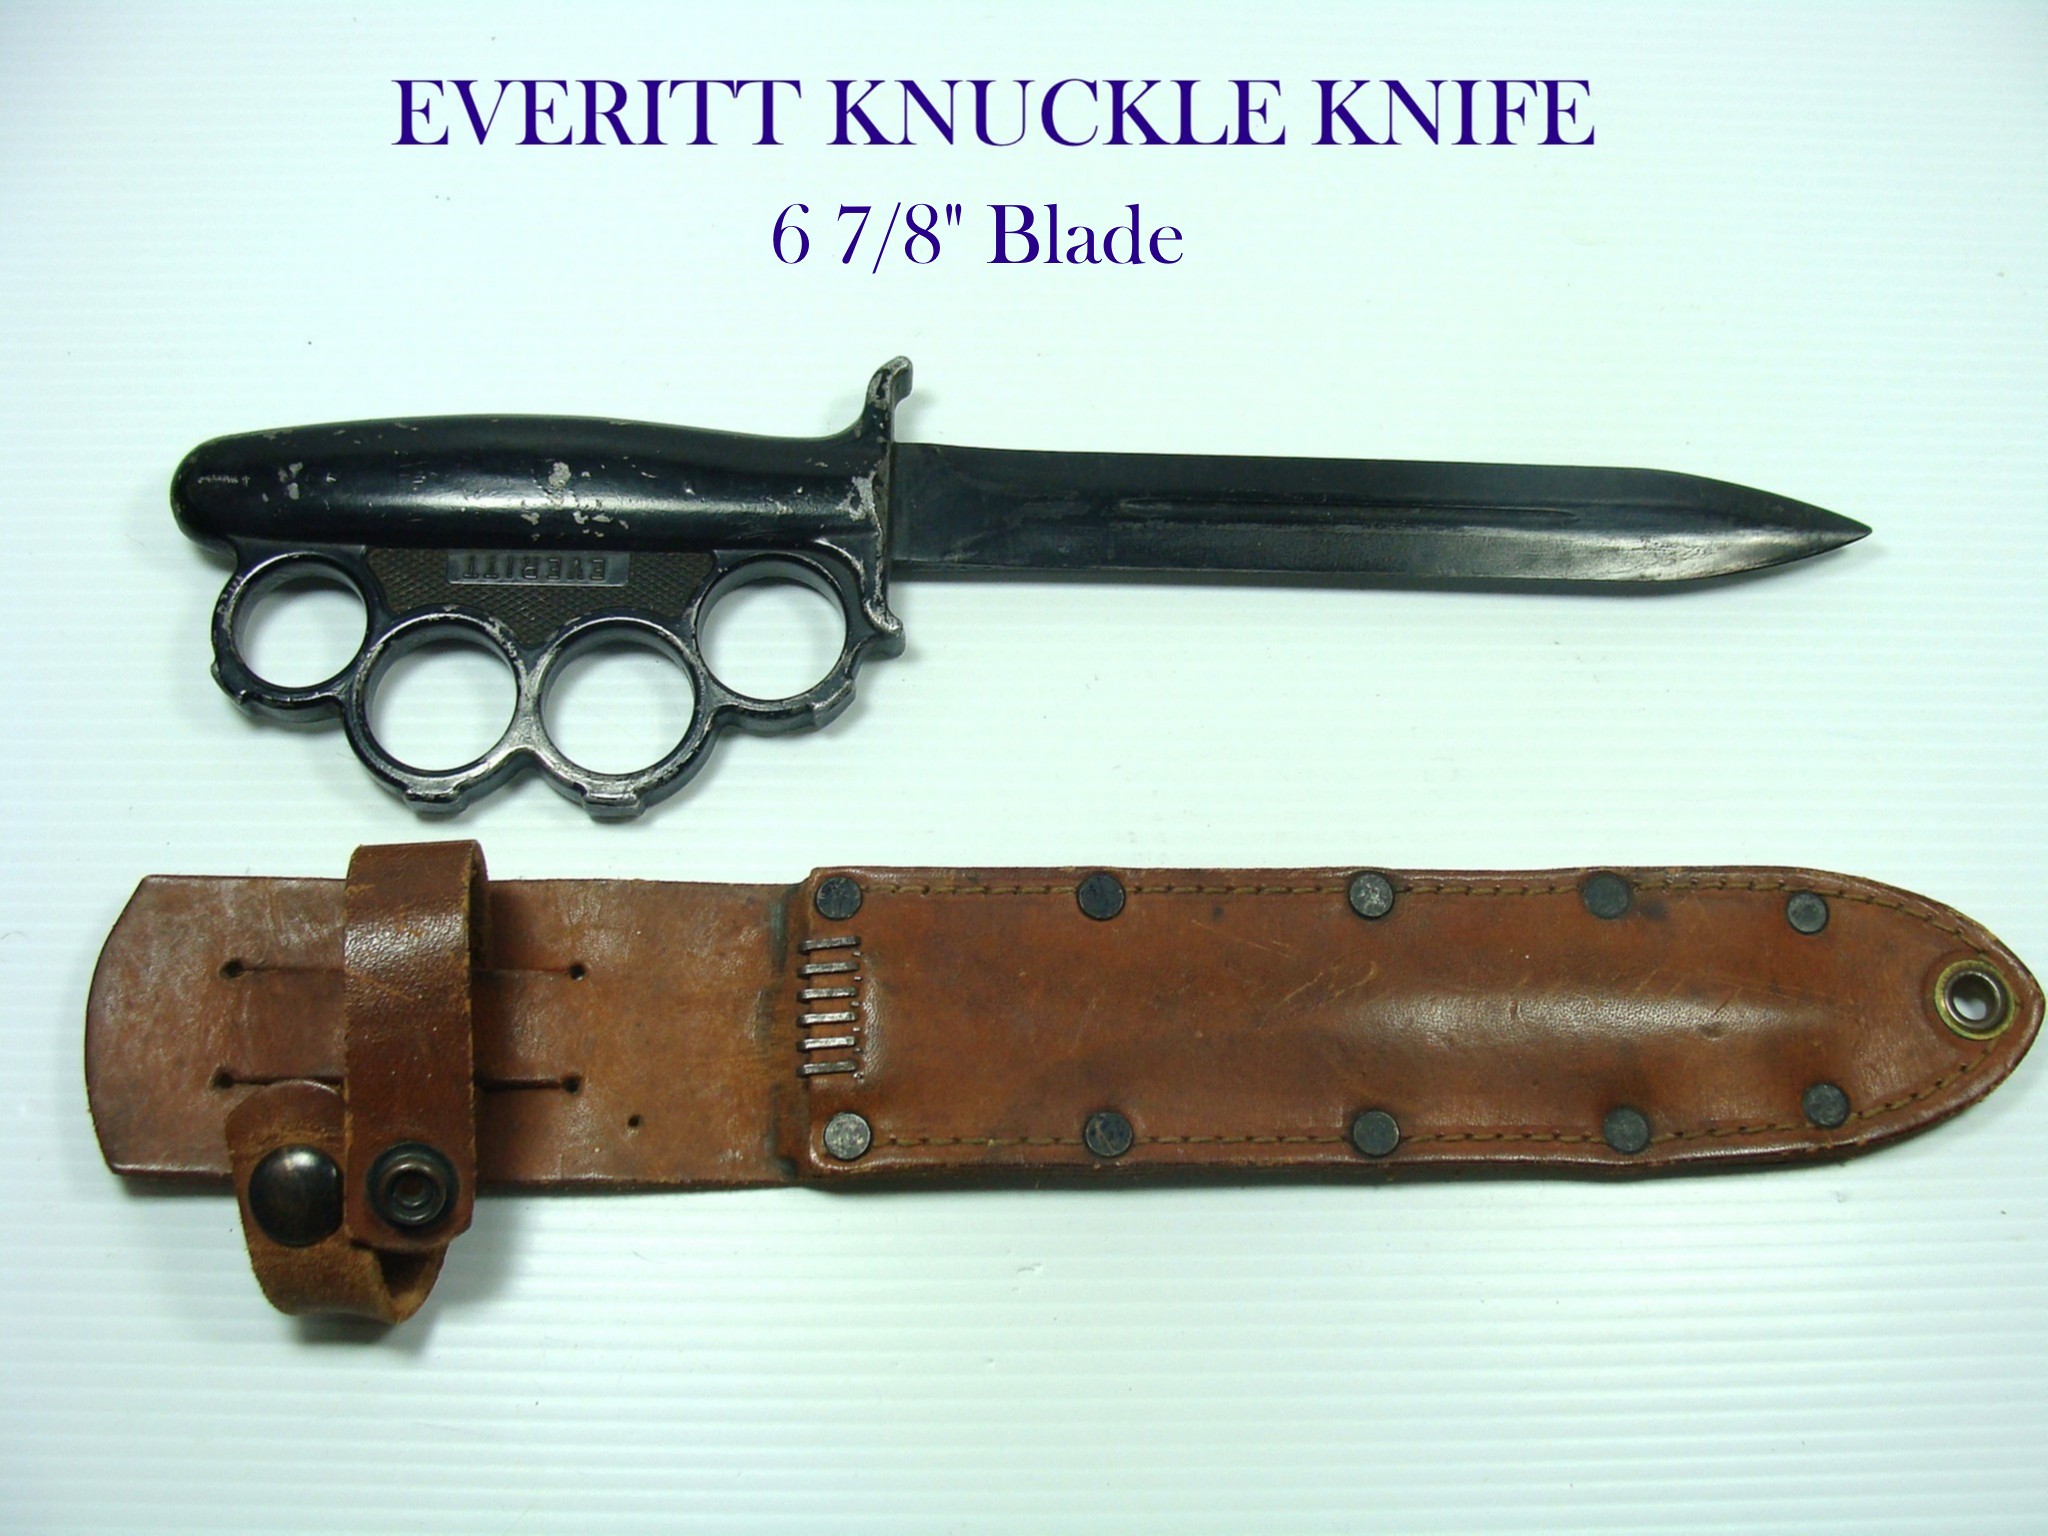 Everitt Knuckle Knife 1.jpg